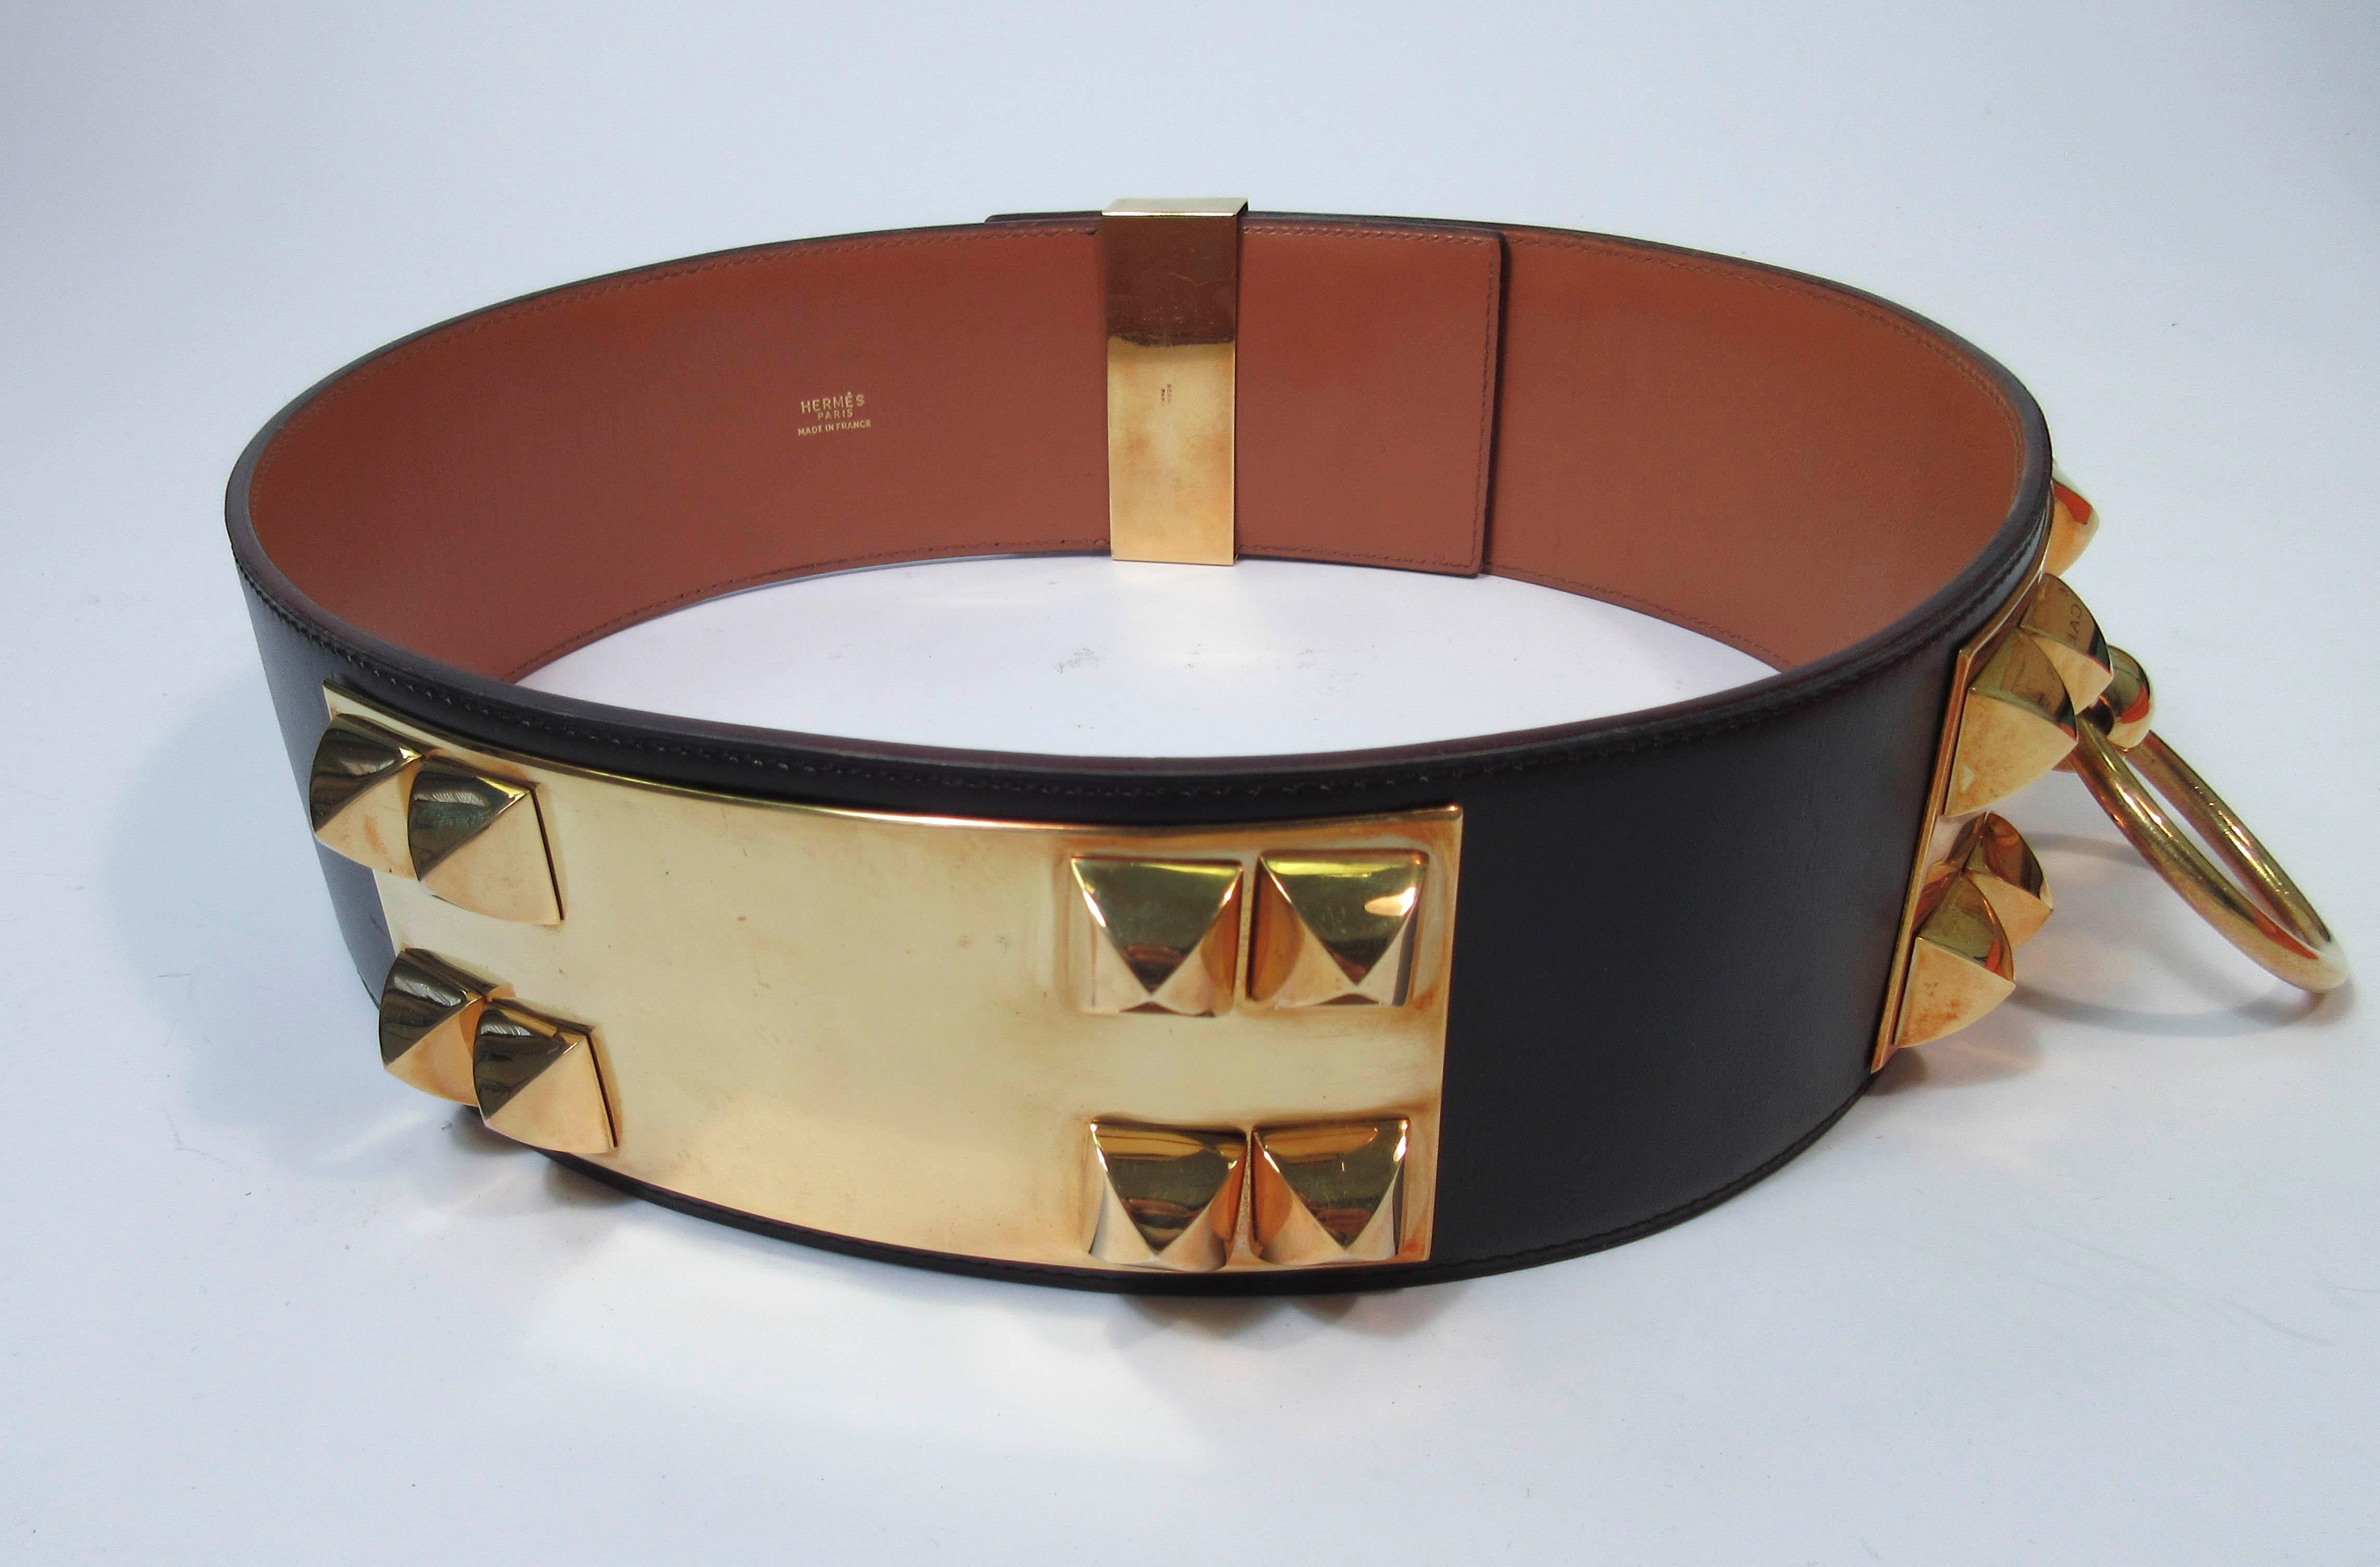 HERMES Collier De Chien Vintage Brown Leather Belt with Gold Hardware Size Large 8